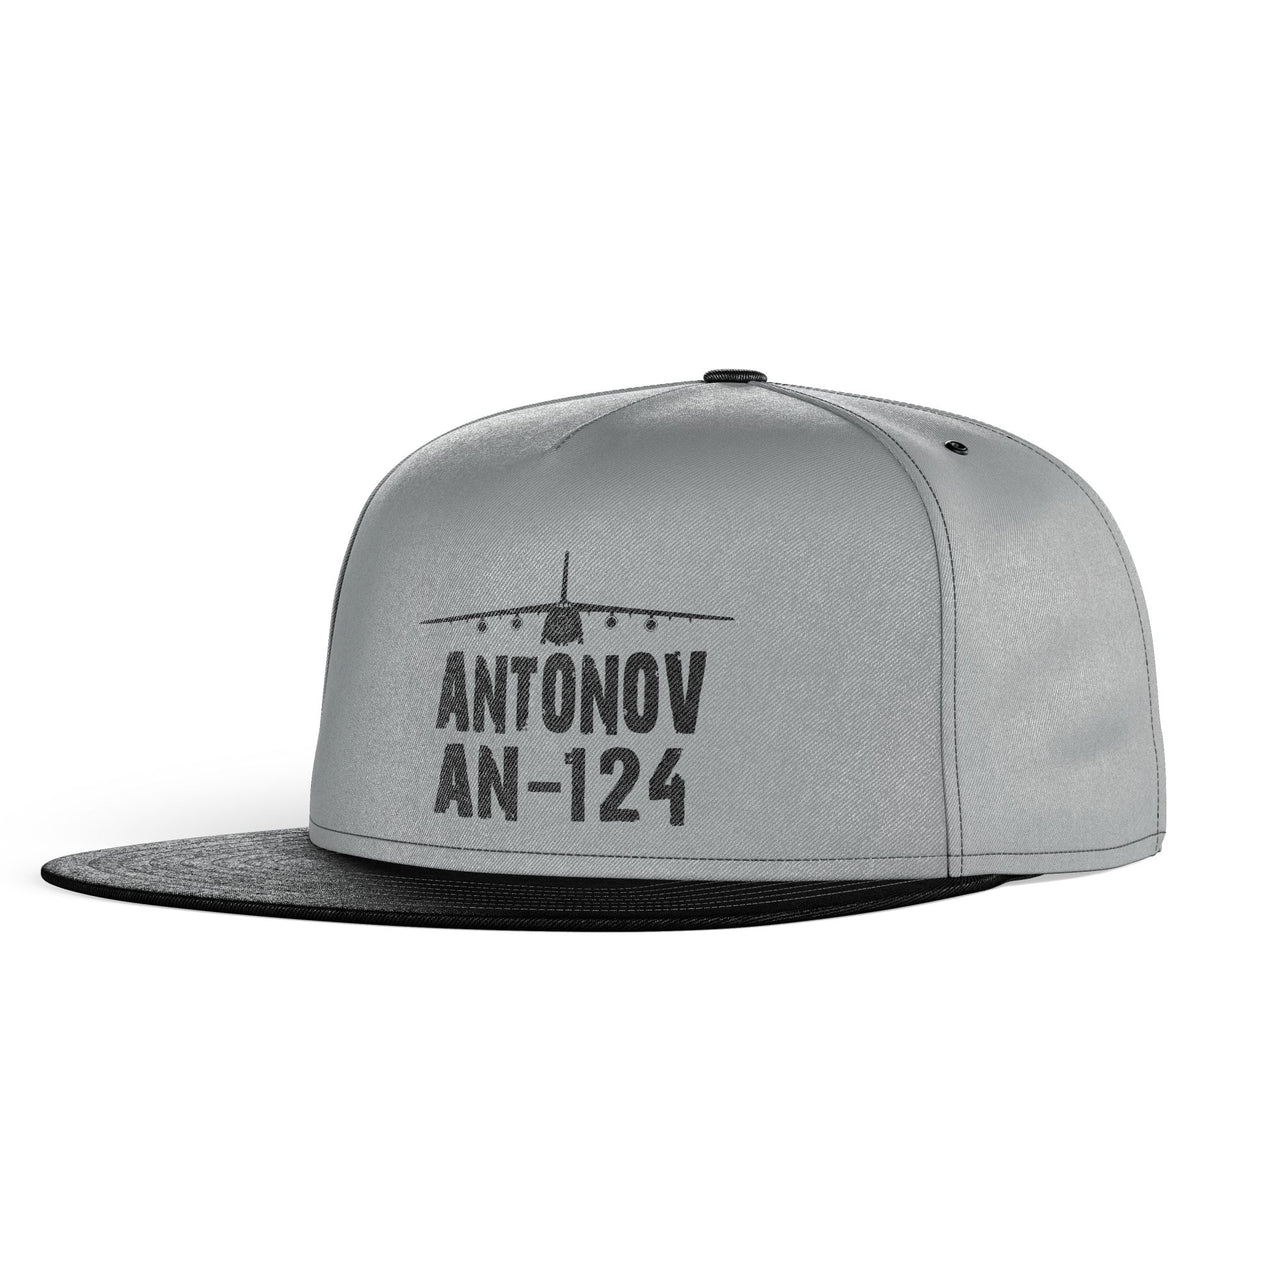 Antonov AN-124 & Plane Designed Snapback Caps & Hats